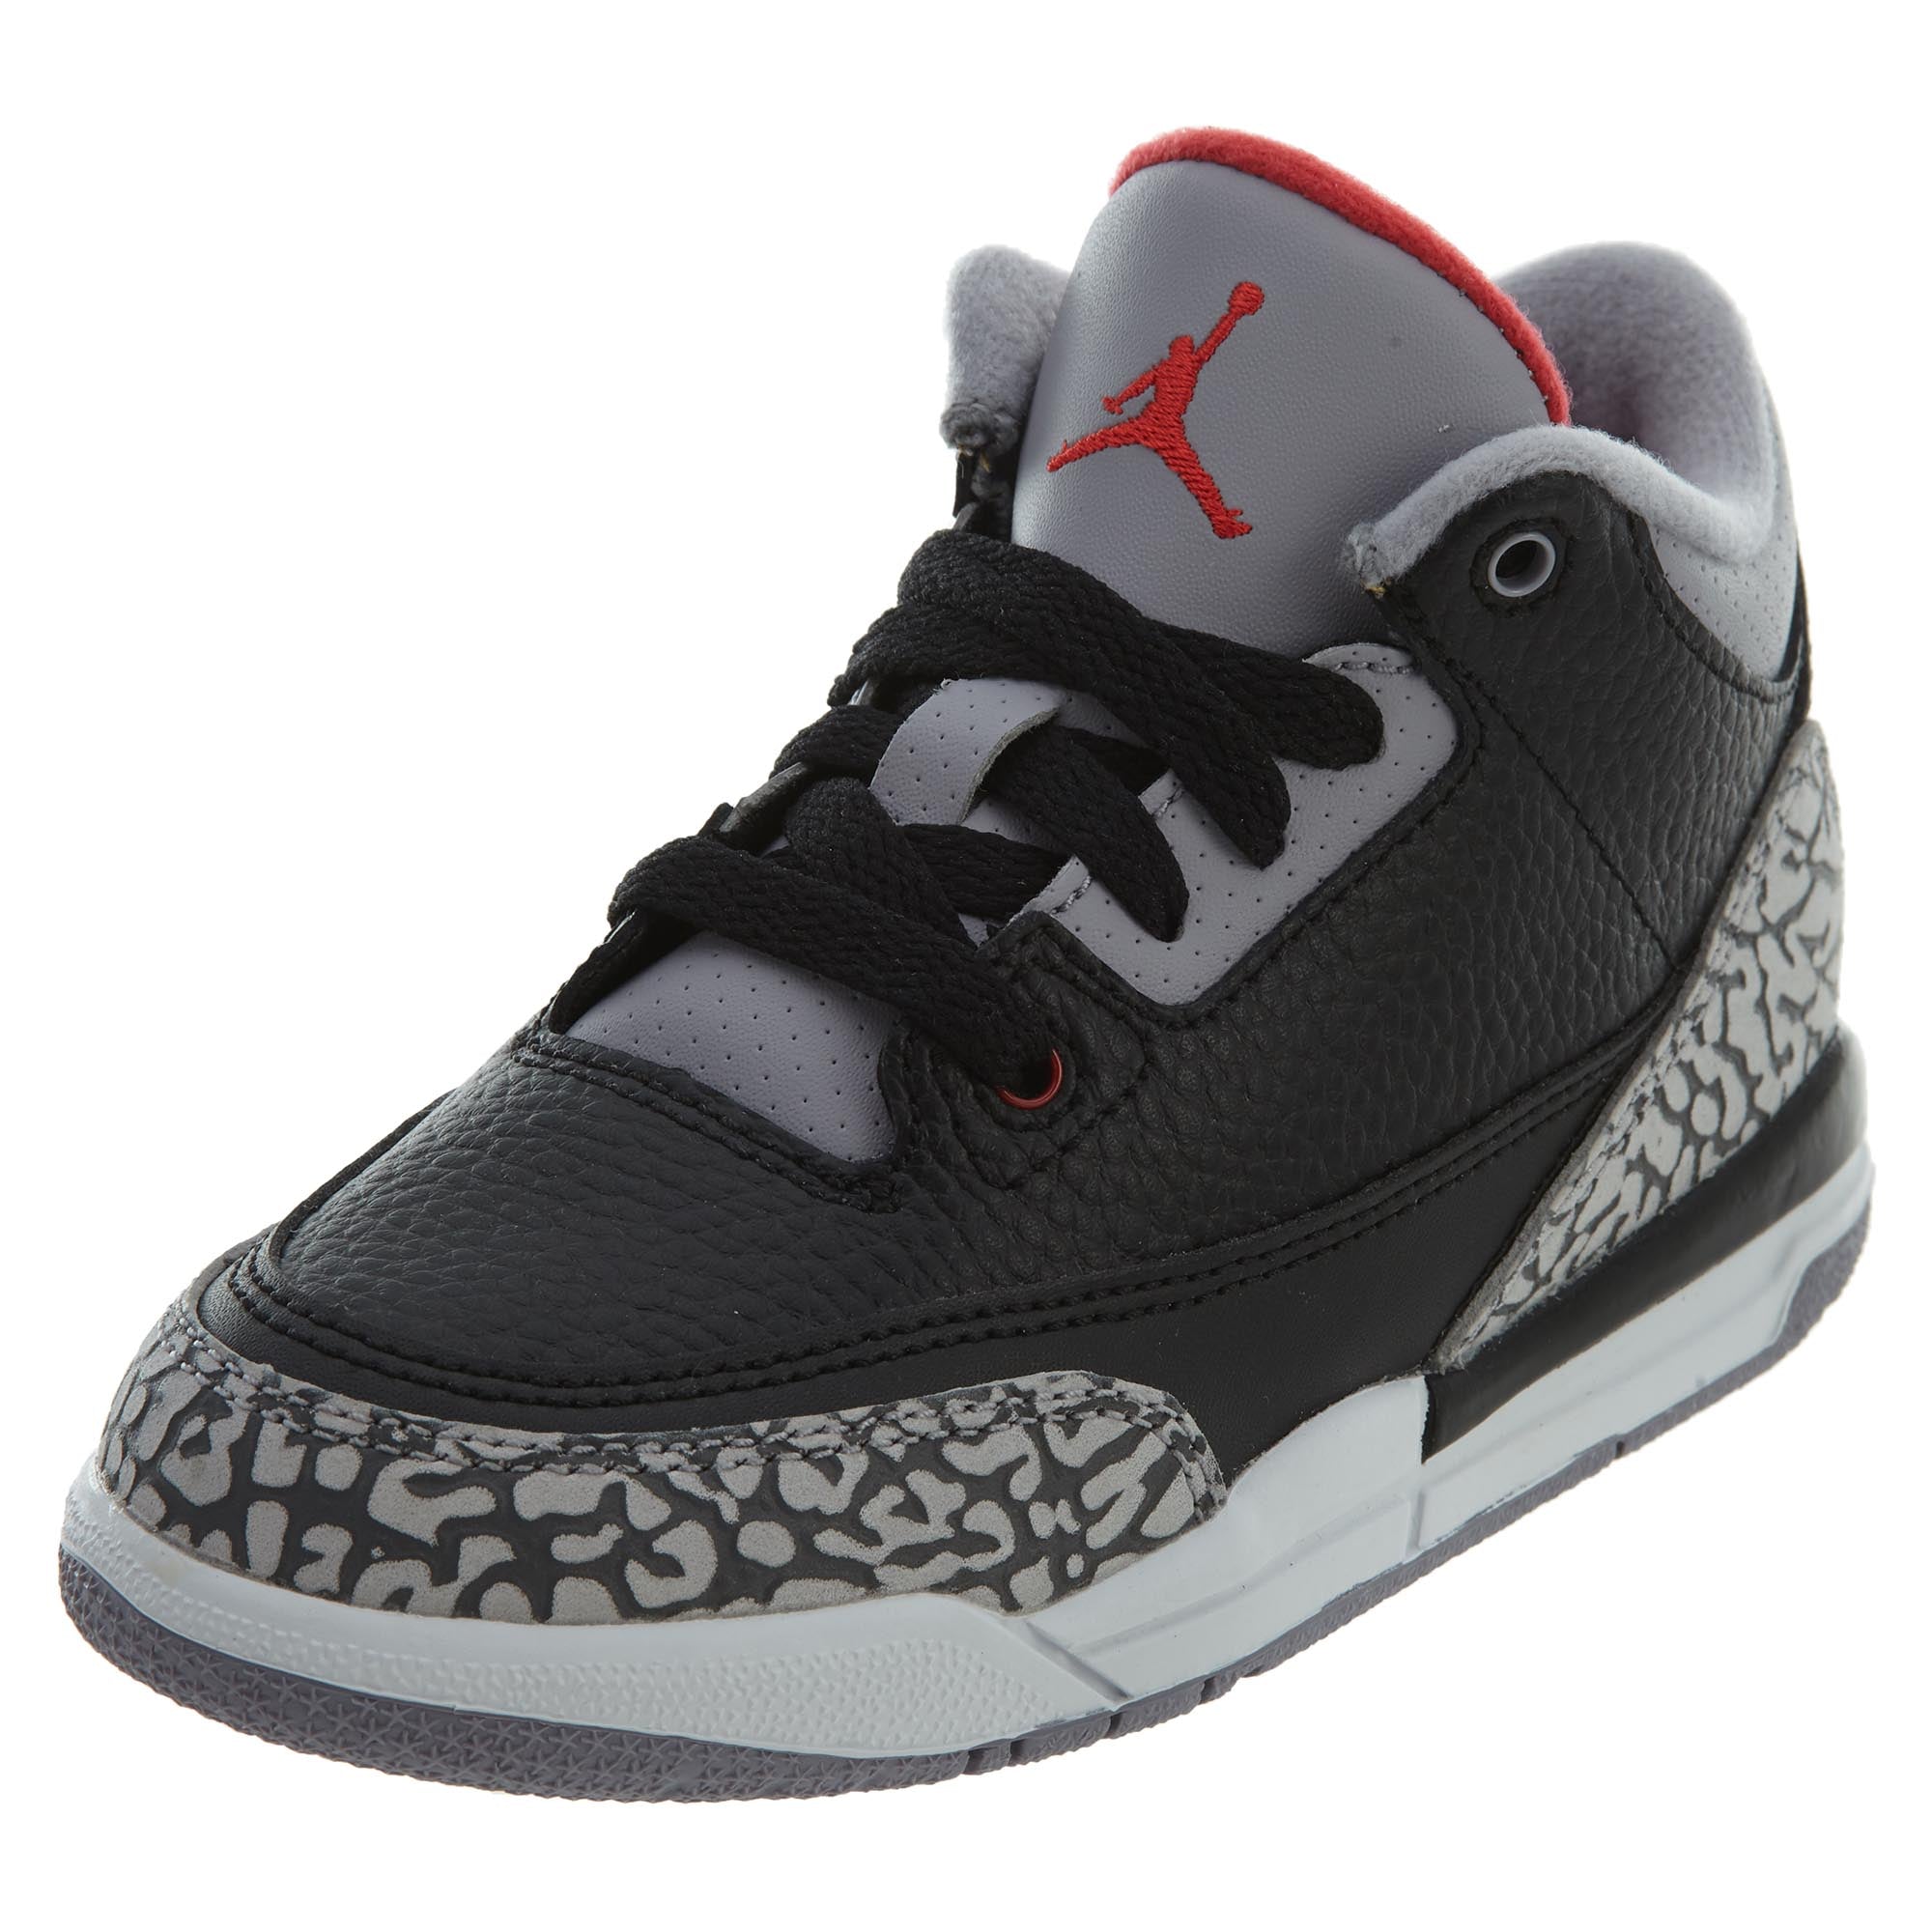 Jordan 3 Retro BP 'Black Cement' Basketball Shoes Boys / Girls Style :429487